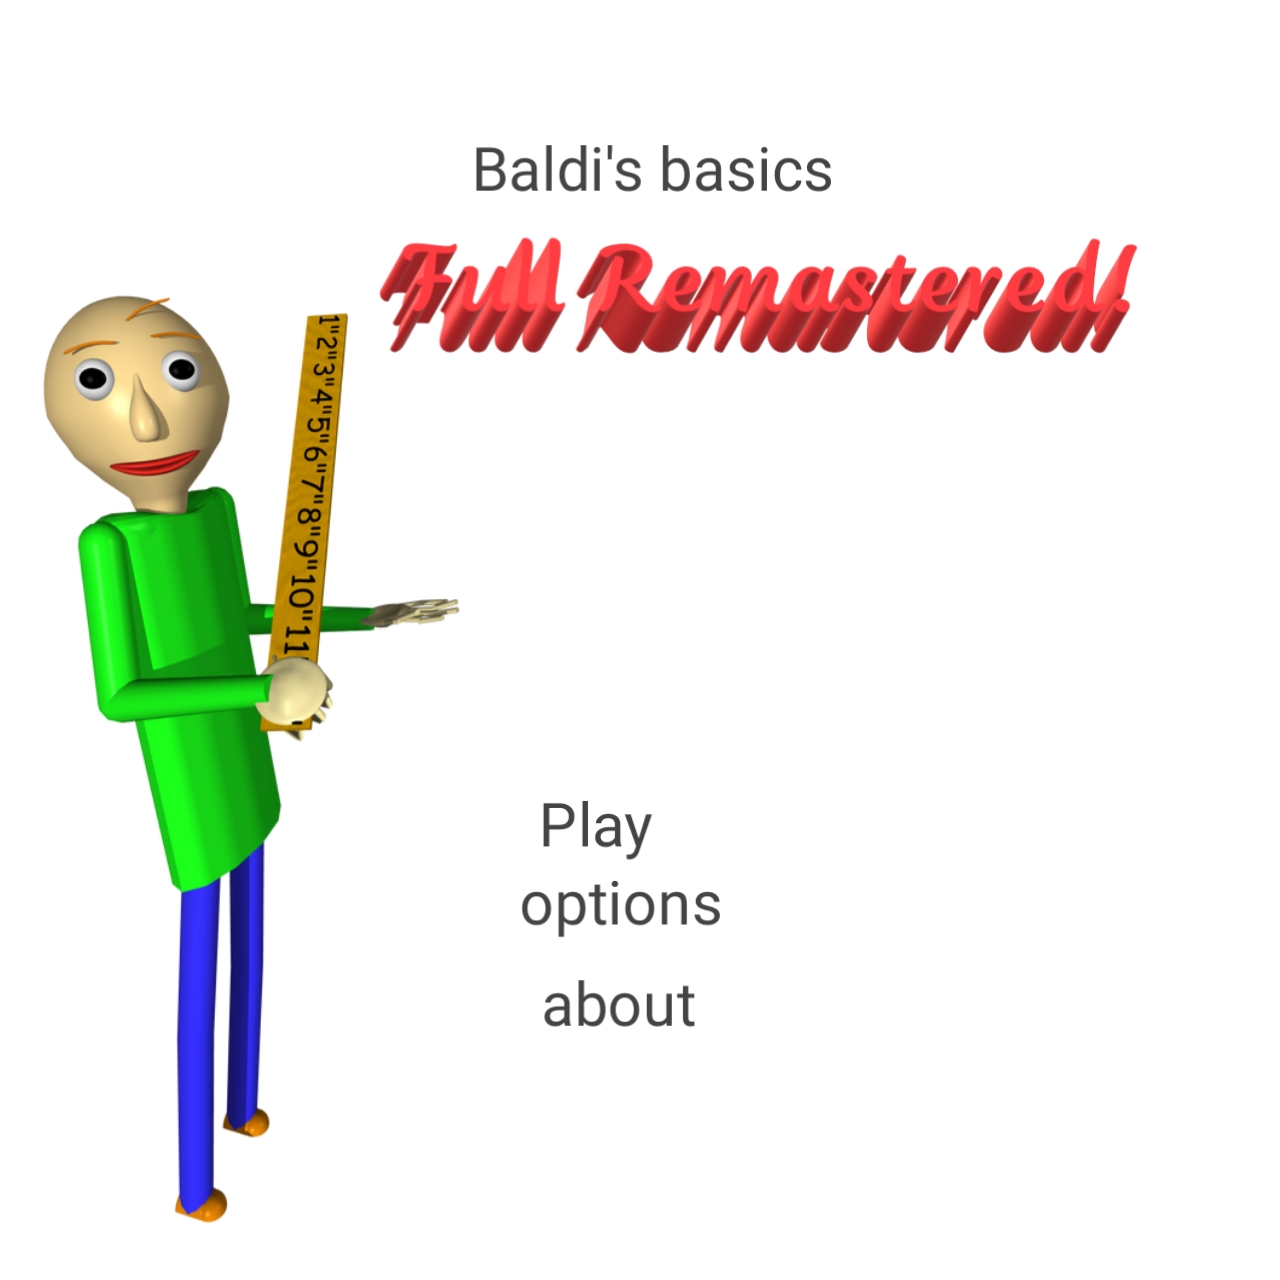 Baldi basics remastered на андроид